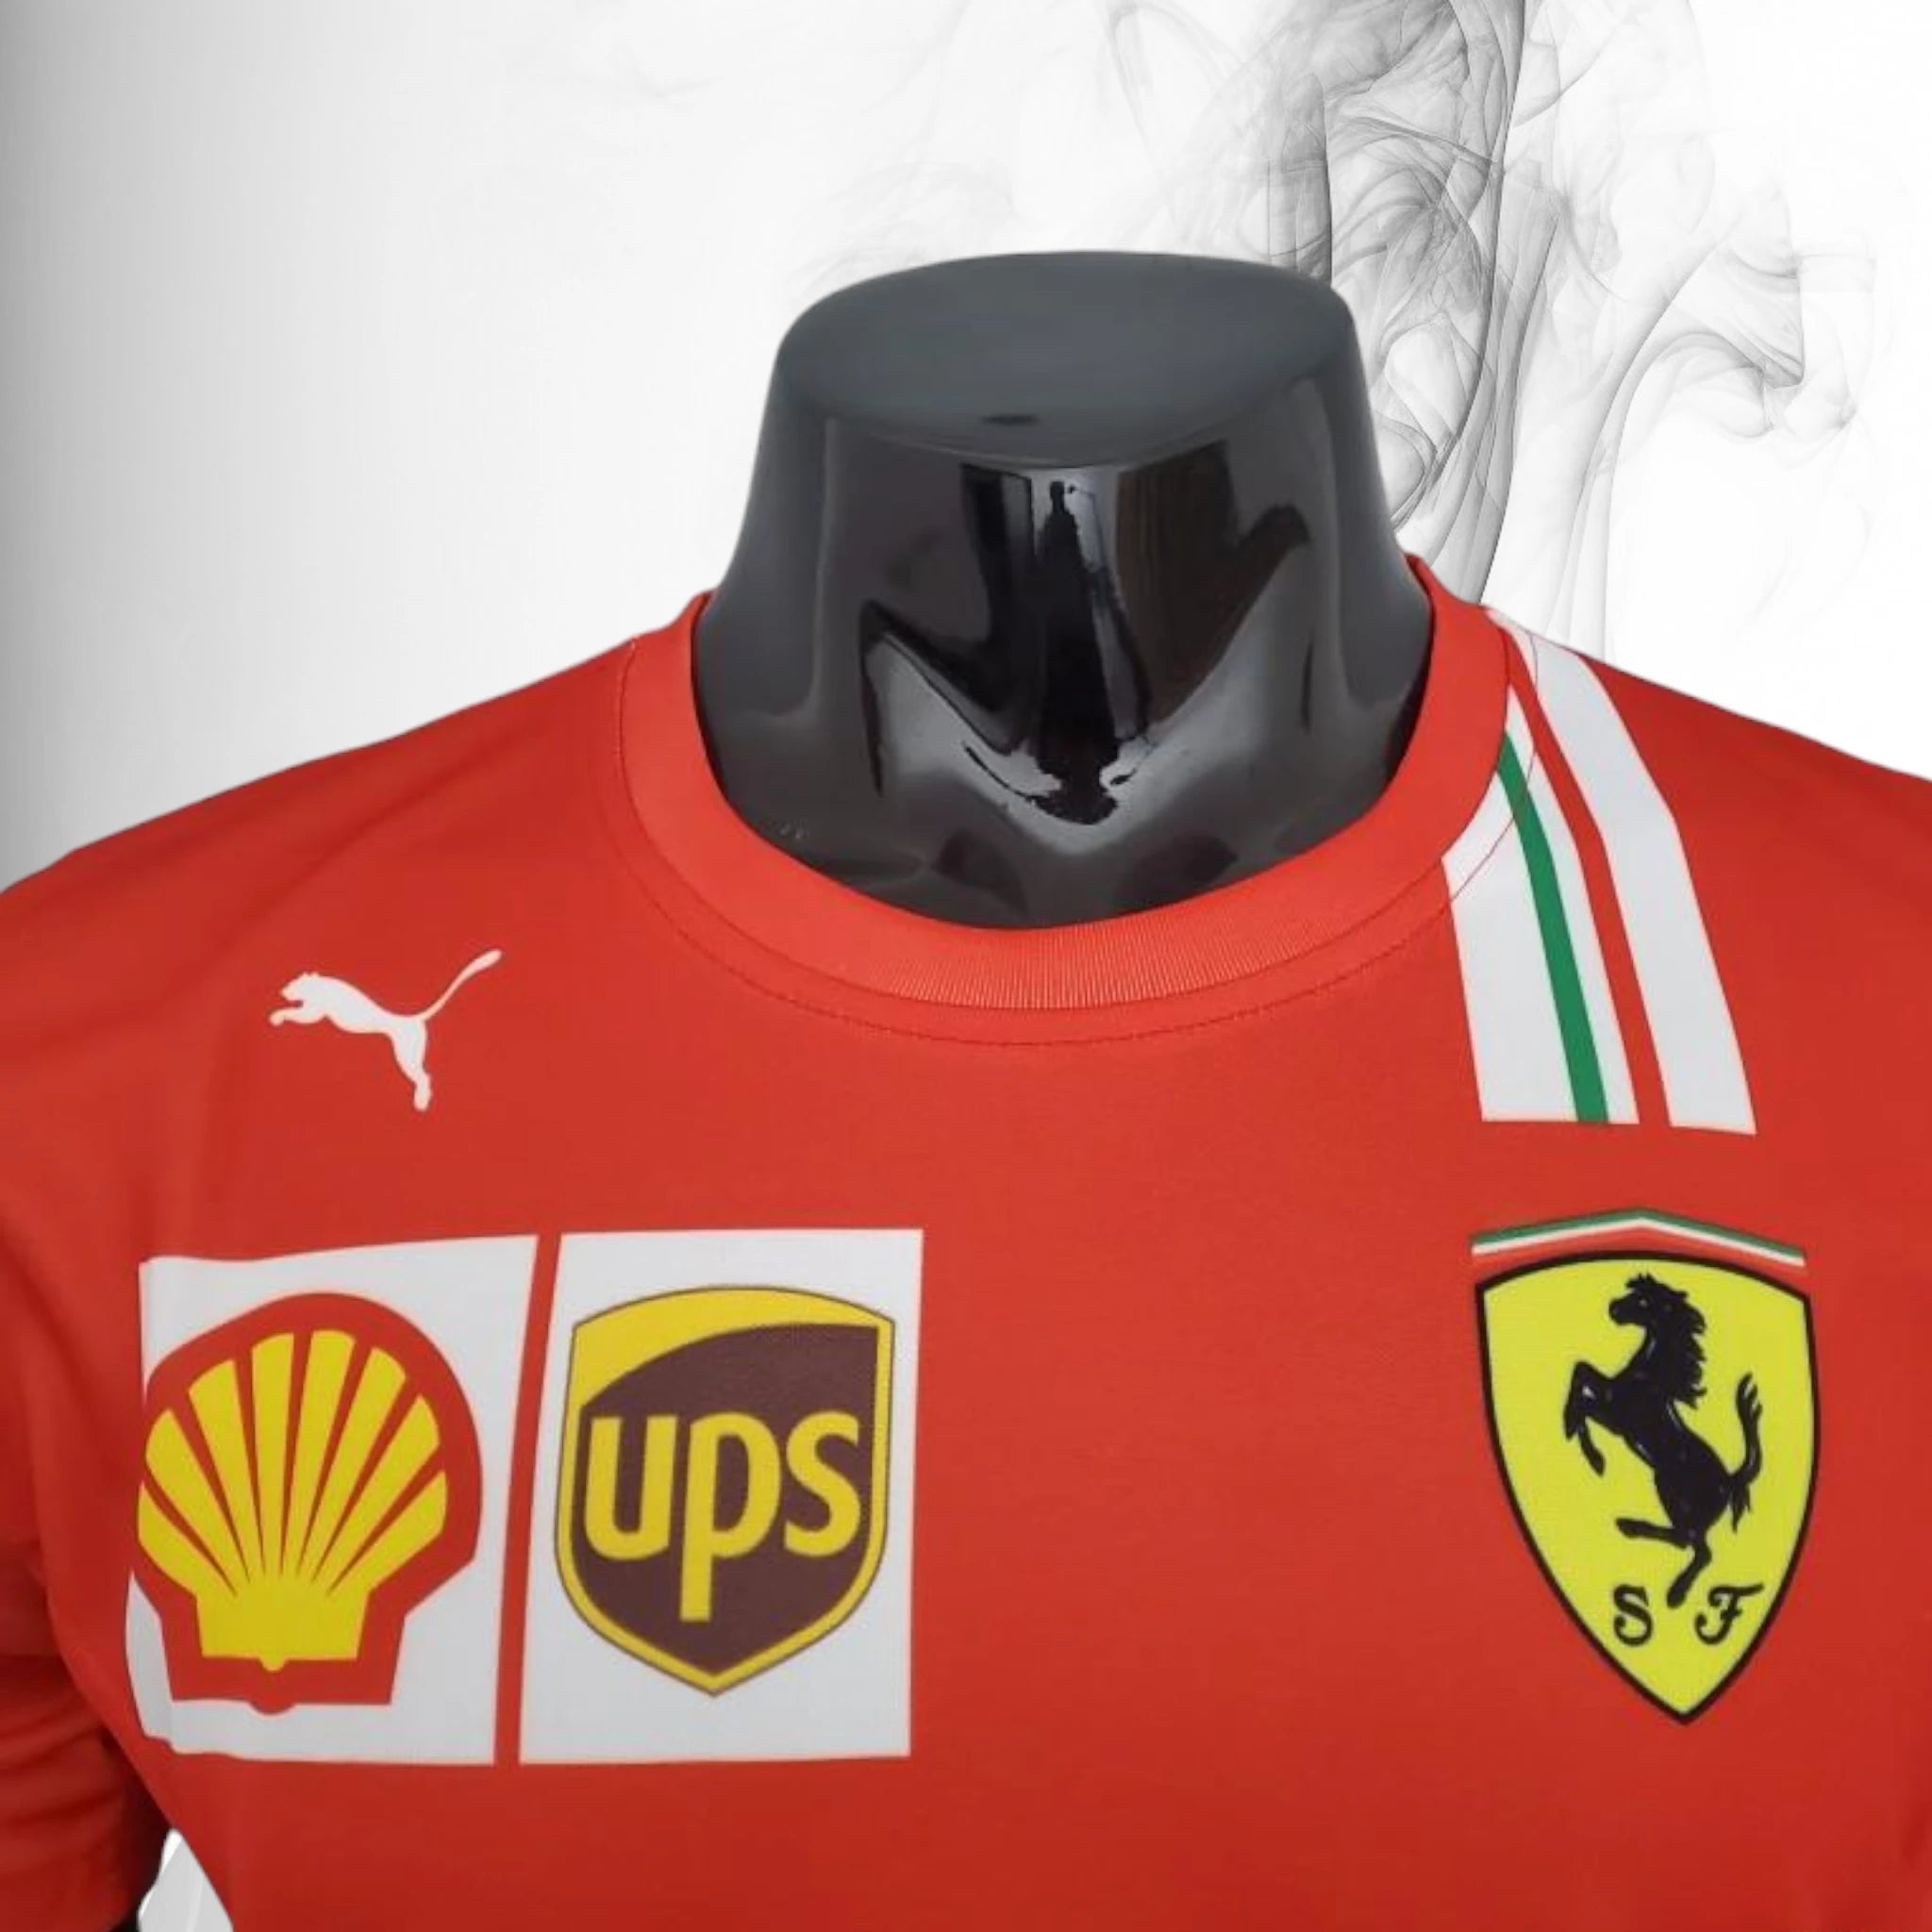 2021 Ferrari Formula One Racing T-Shirt